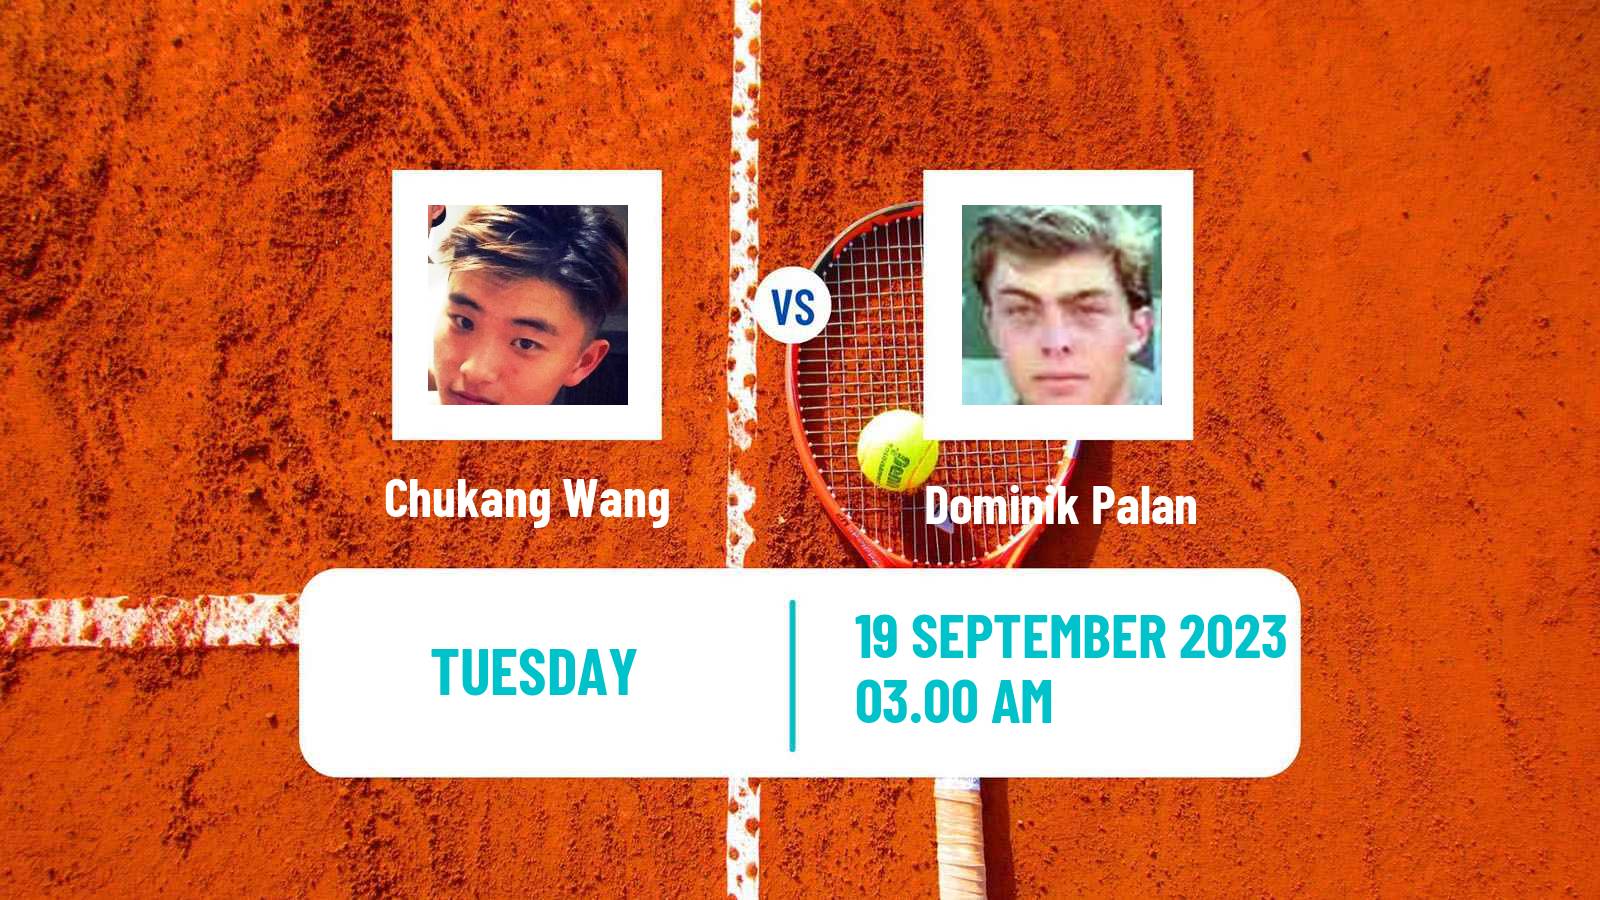 Tennis ATP Zhuhai Chukang Wang - Dominik Palan